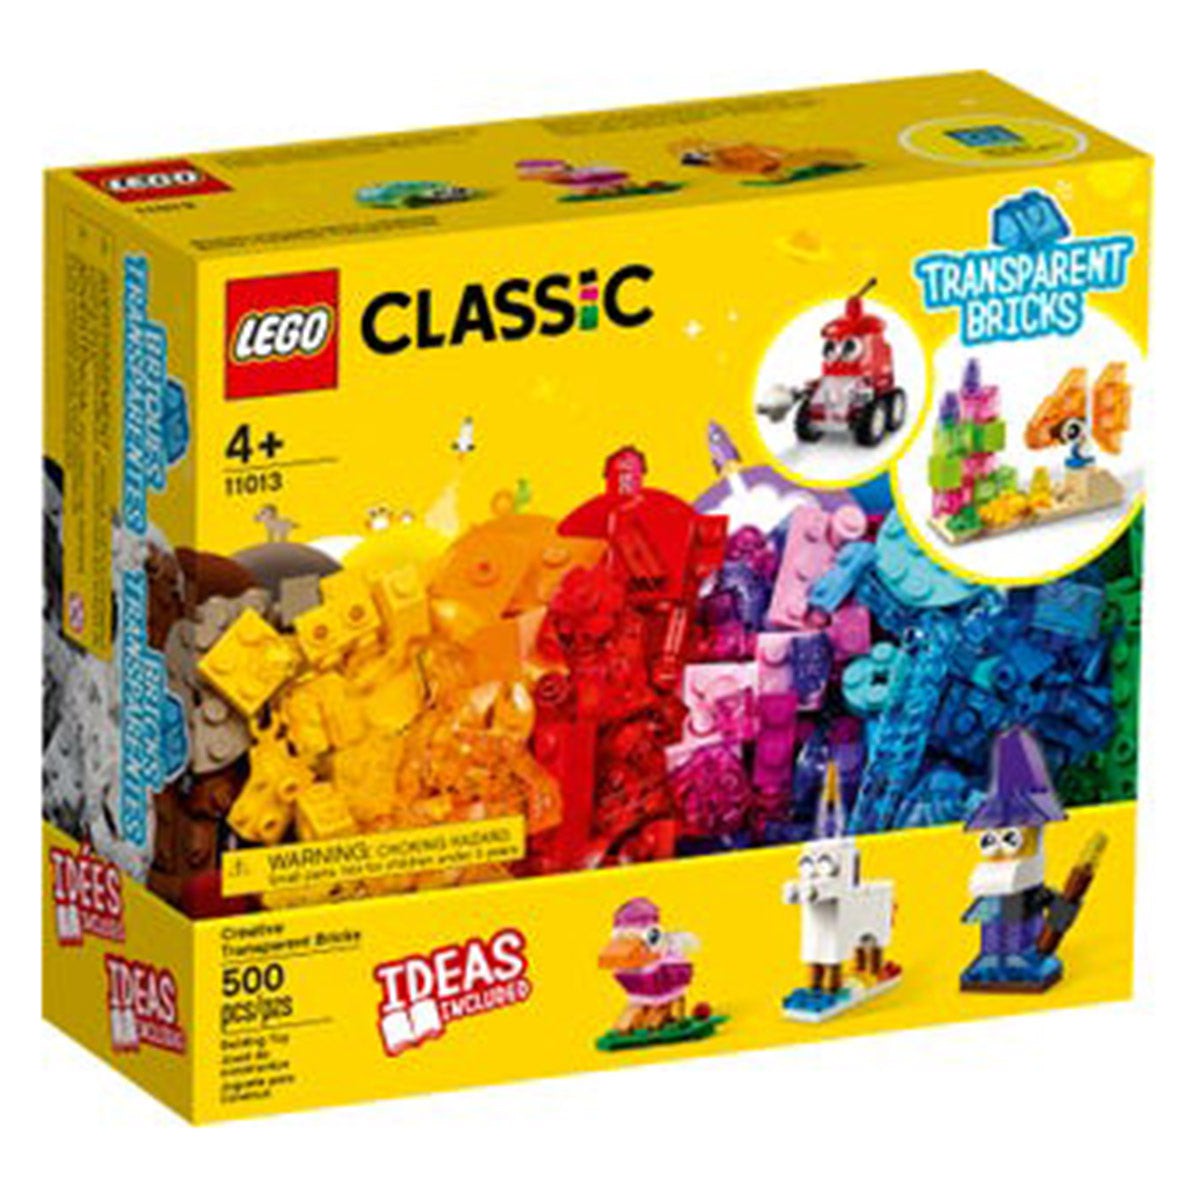 LEGO JOUET K.I.D. INC Toys & Games LEGO Classic Creative Transparent Bricks, 11013, Ages 4+, 500 Pieces 639630306